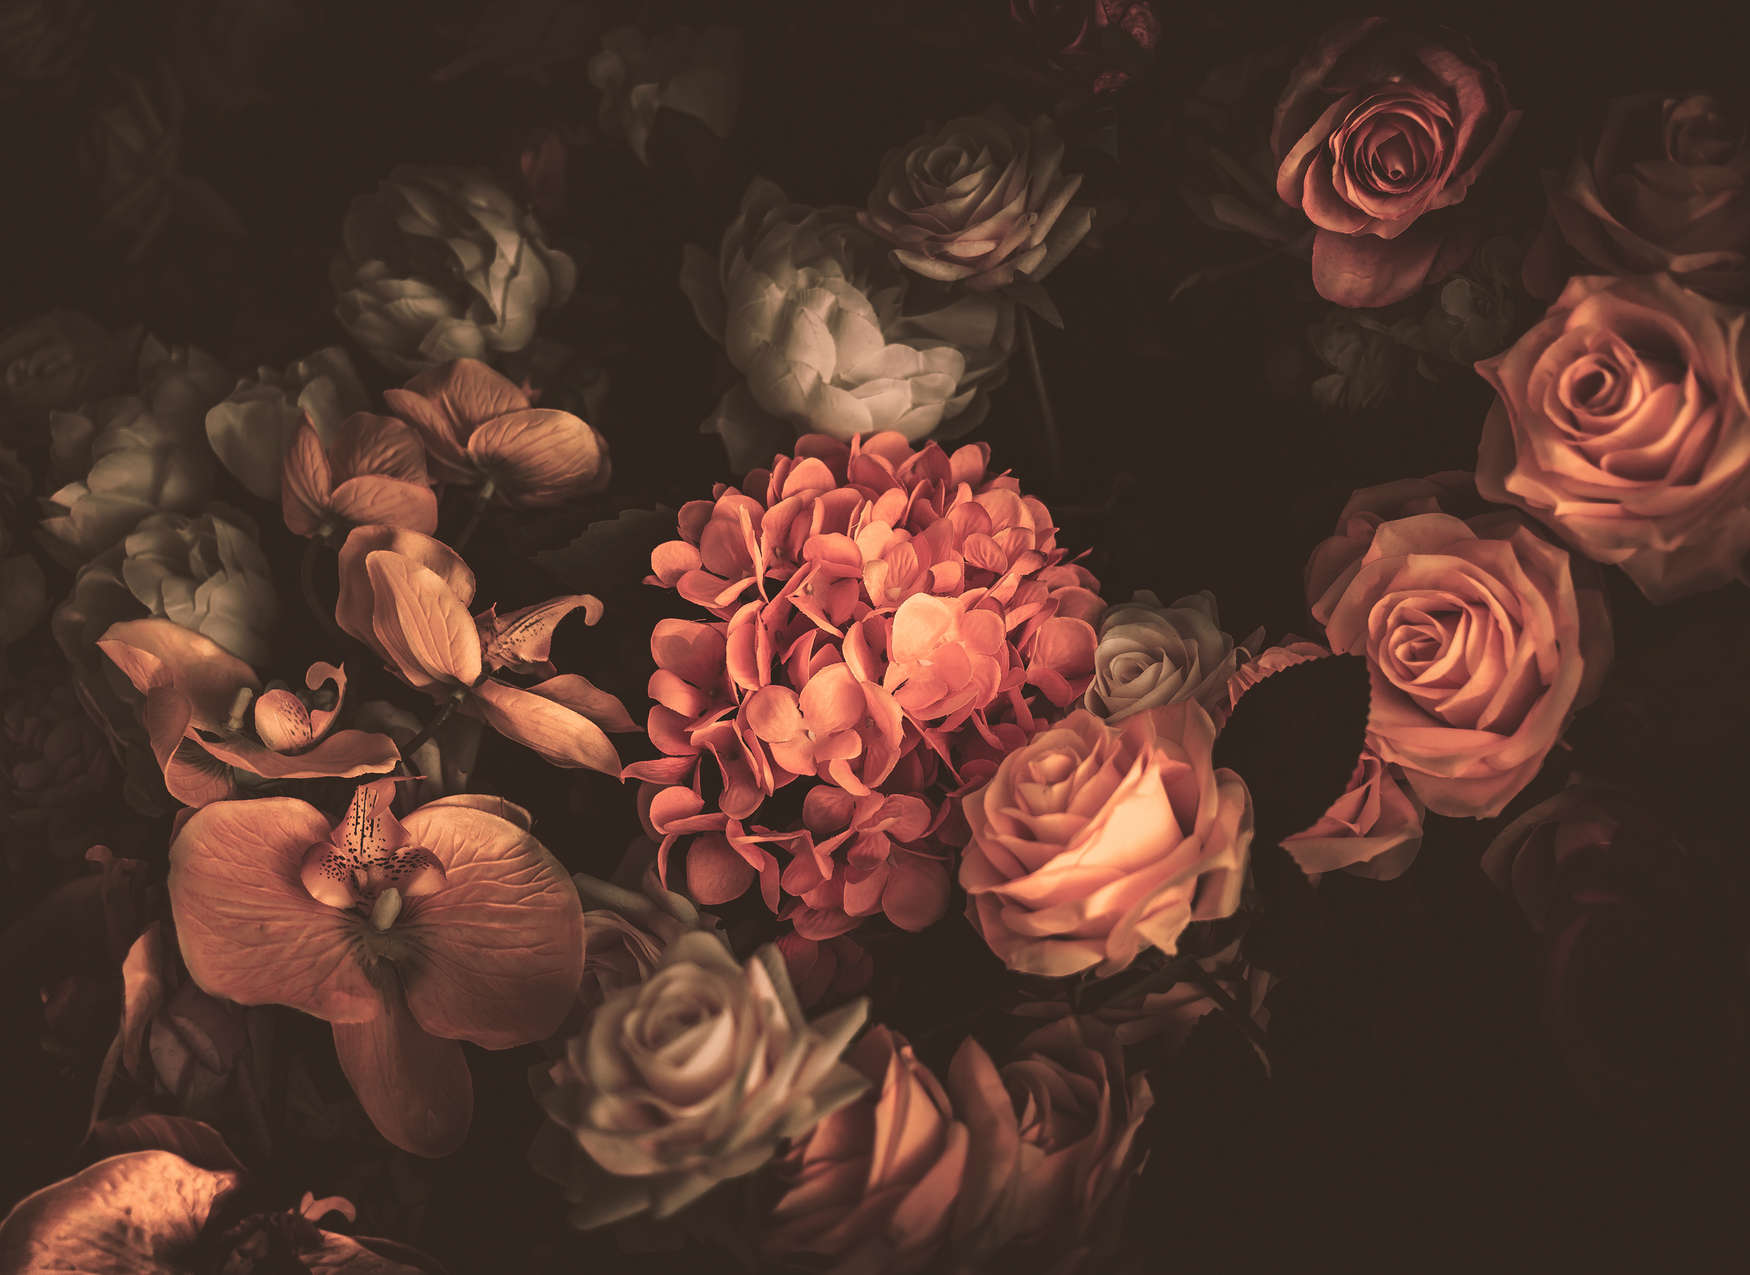             Romantic Wallpaper with Bouquet of Flowers - Orange, Pink, Black
        